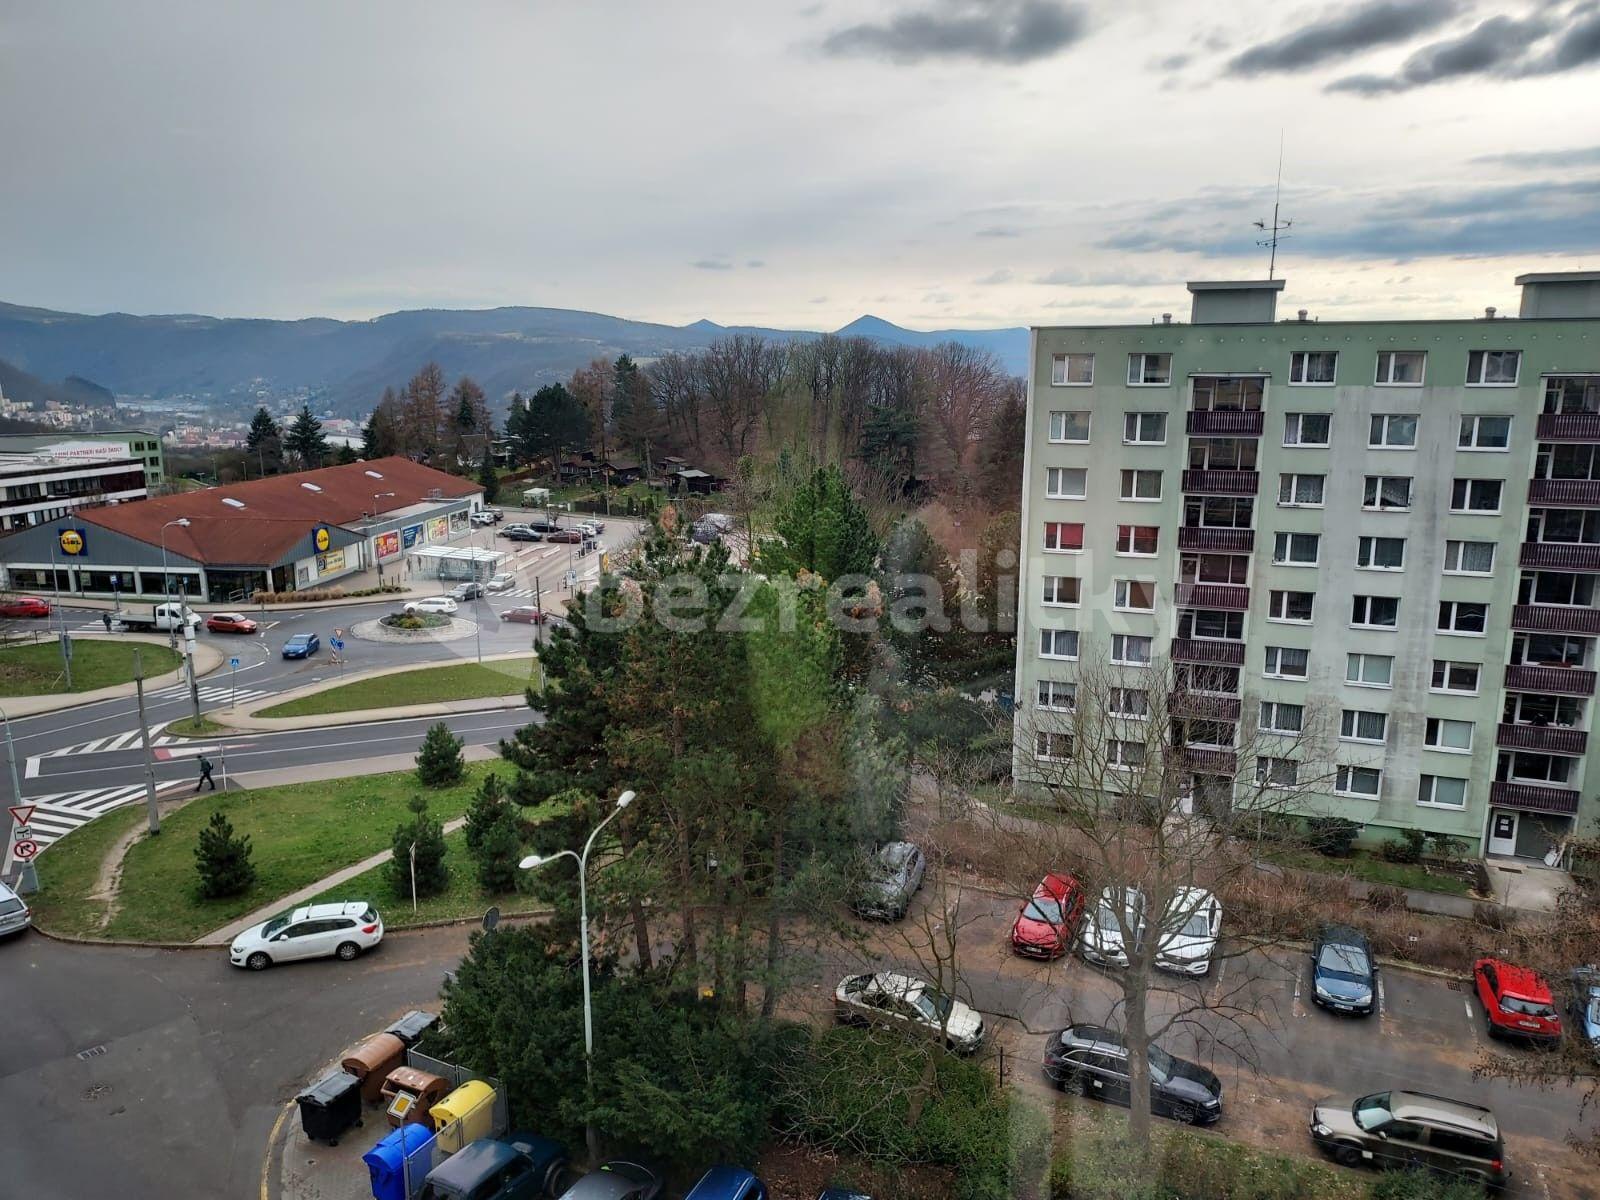 1 bedroom flat to rent, 36 m², Jizerská, Ústí nad Labem, Ústecký Region